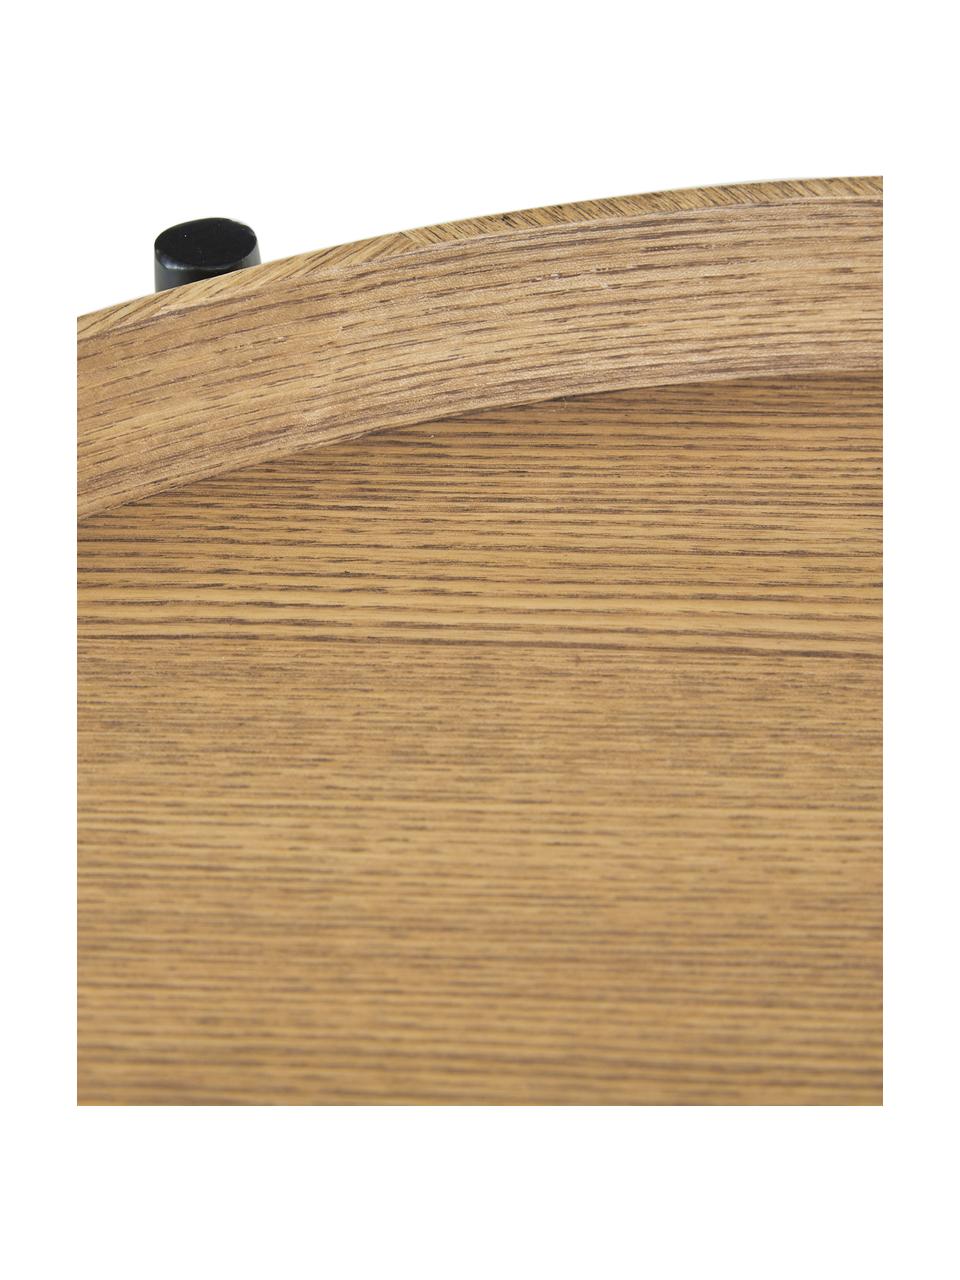 Holz-Beistelltisch Renee mit Eschenholzfurnier, Gestell: Metall, pulverbeschichtet, Eschenholz, Ø 44 x H 49 cm